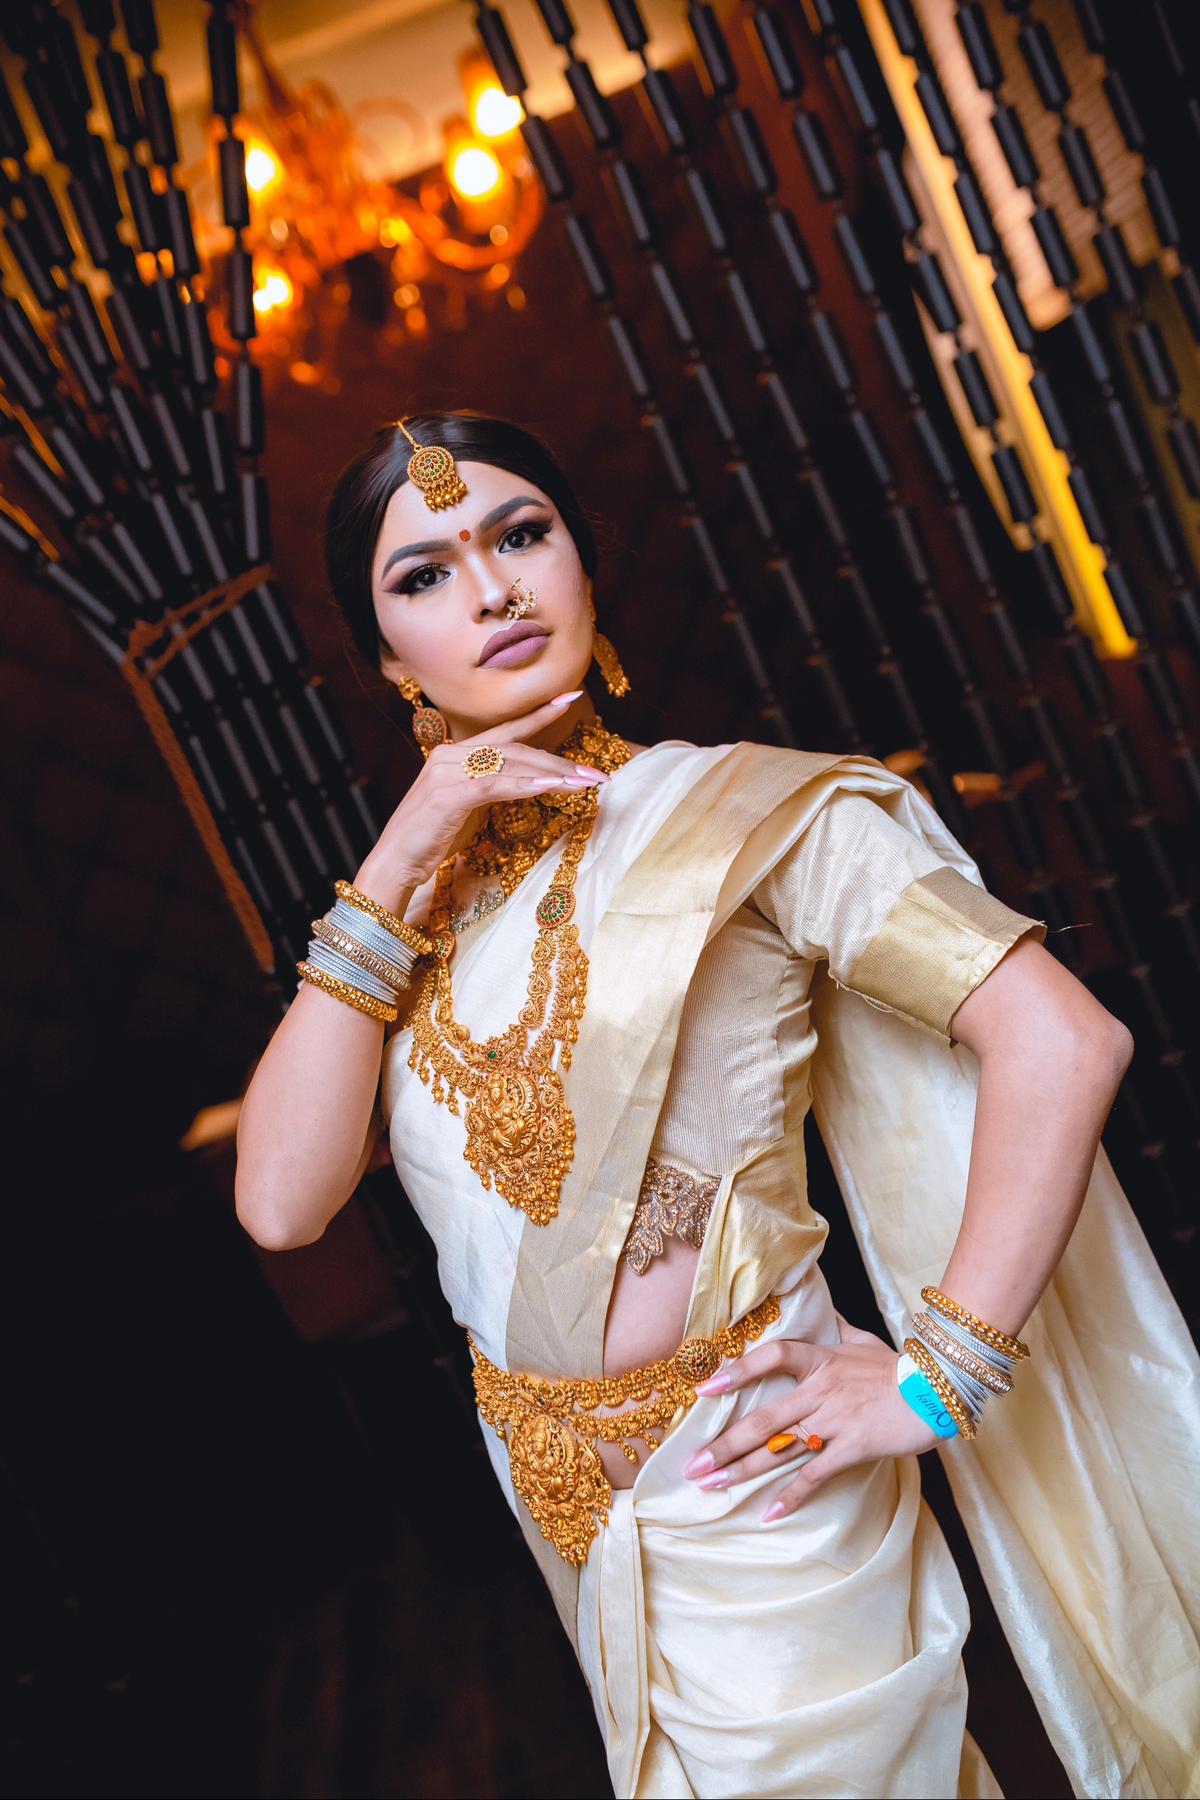 Shivam Kumar as Queen Shivangi